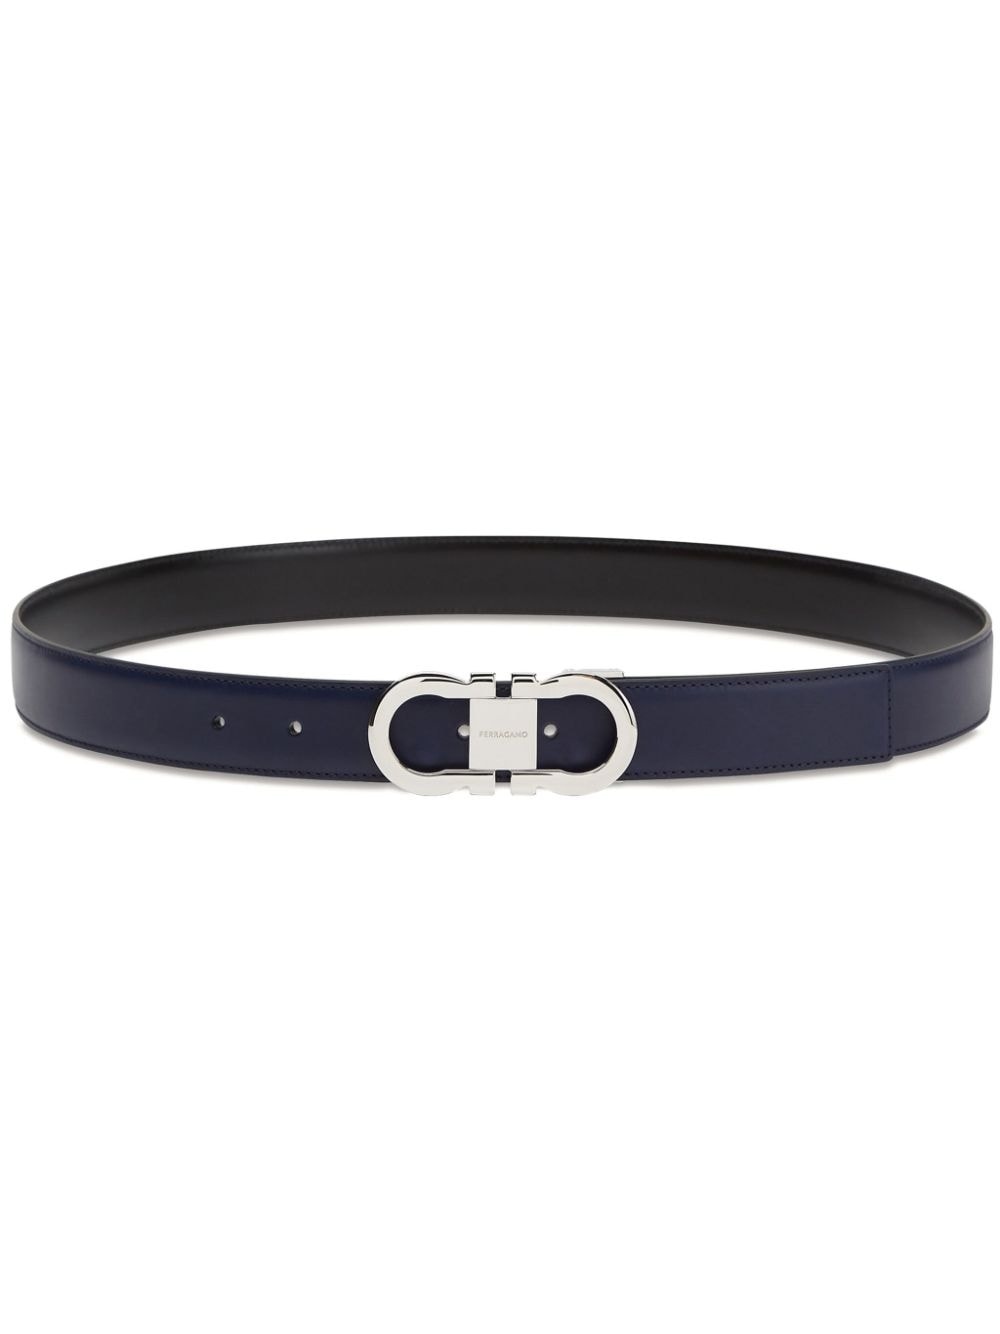 Gacini leather belt - 1